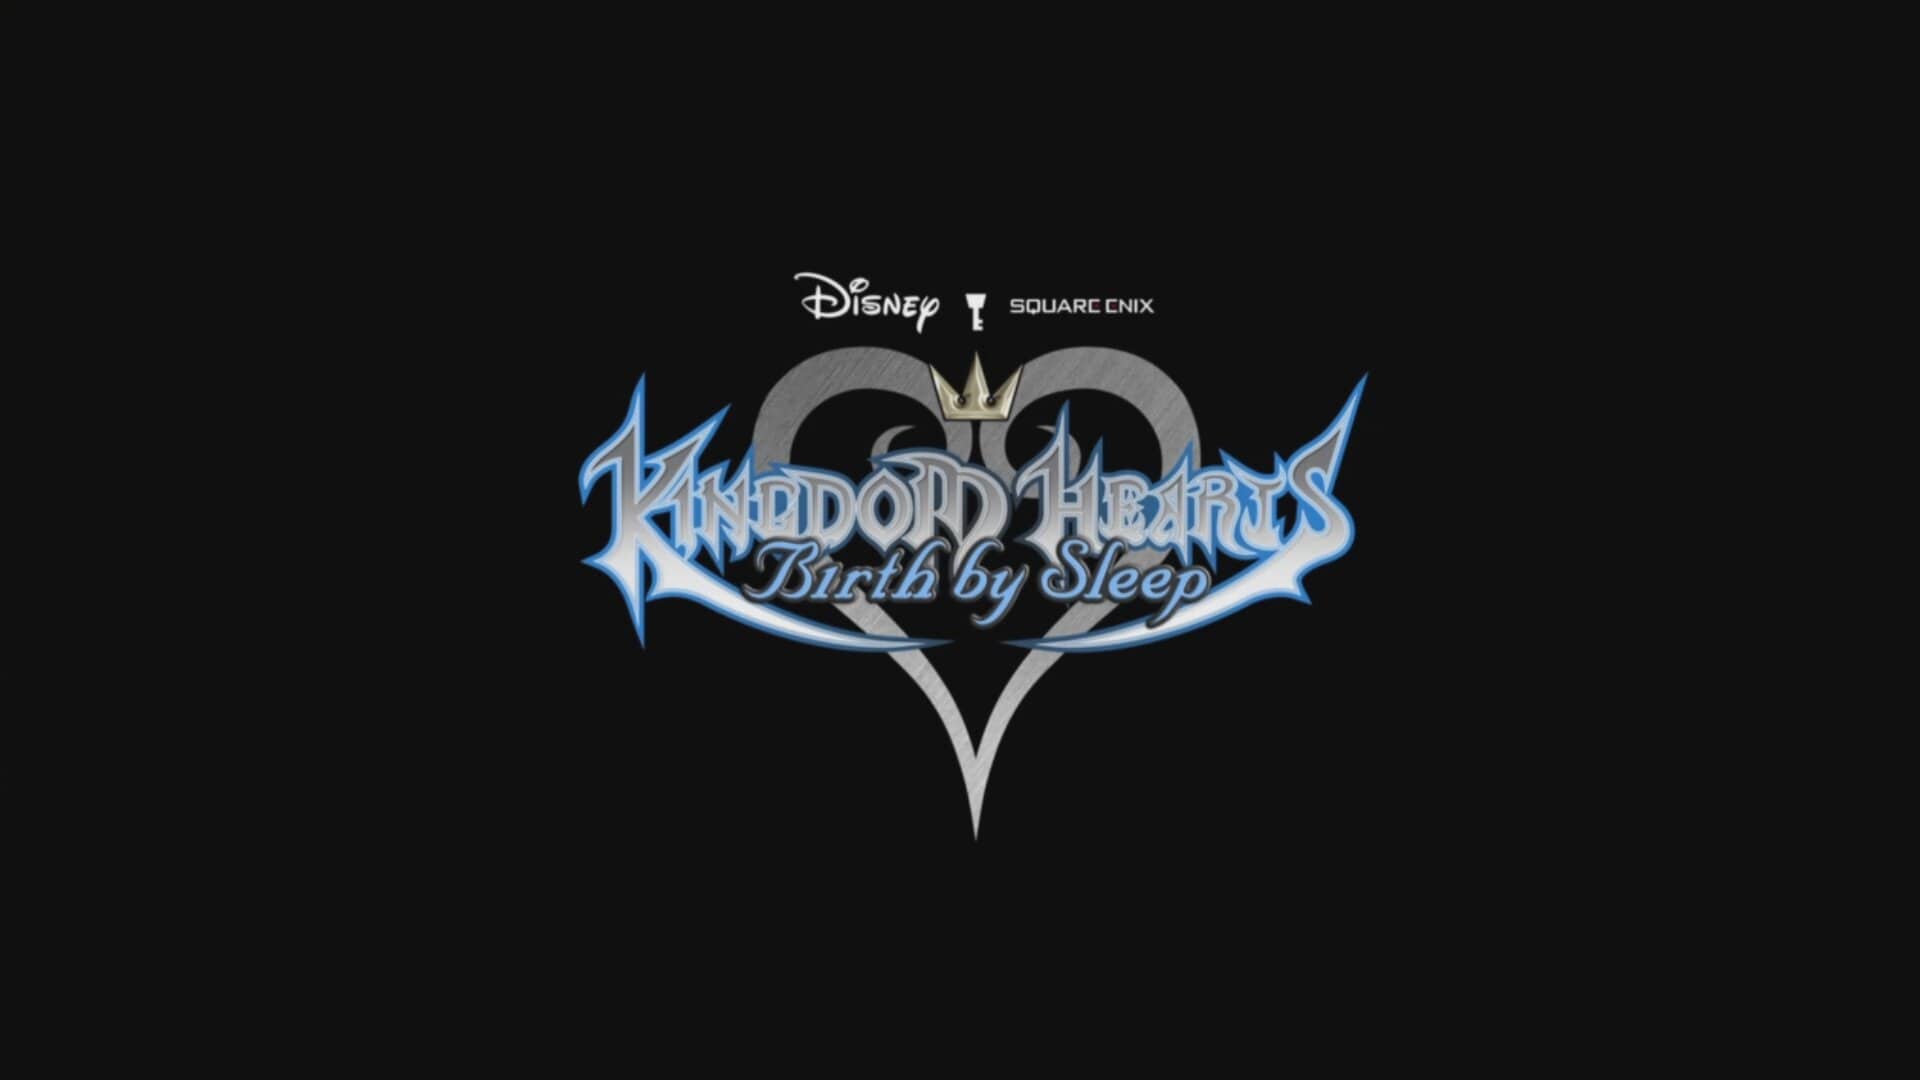 Kingdom Hearts Birthday Sleep Final MIX logo